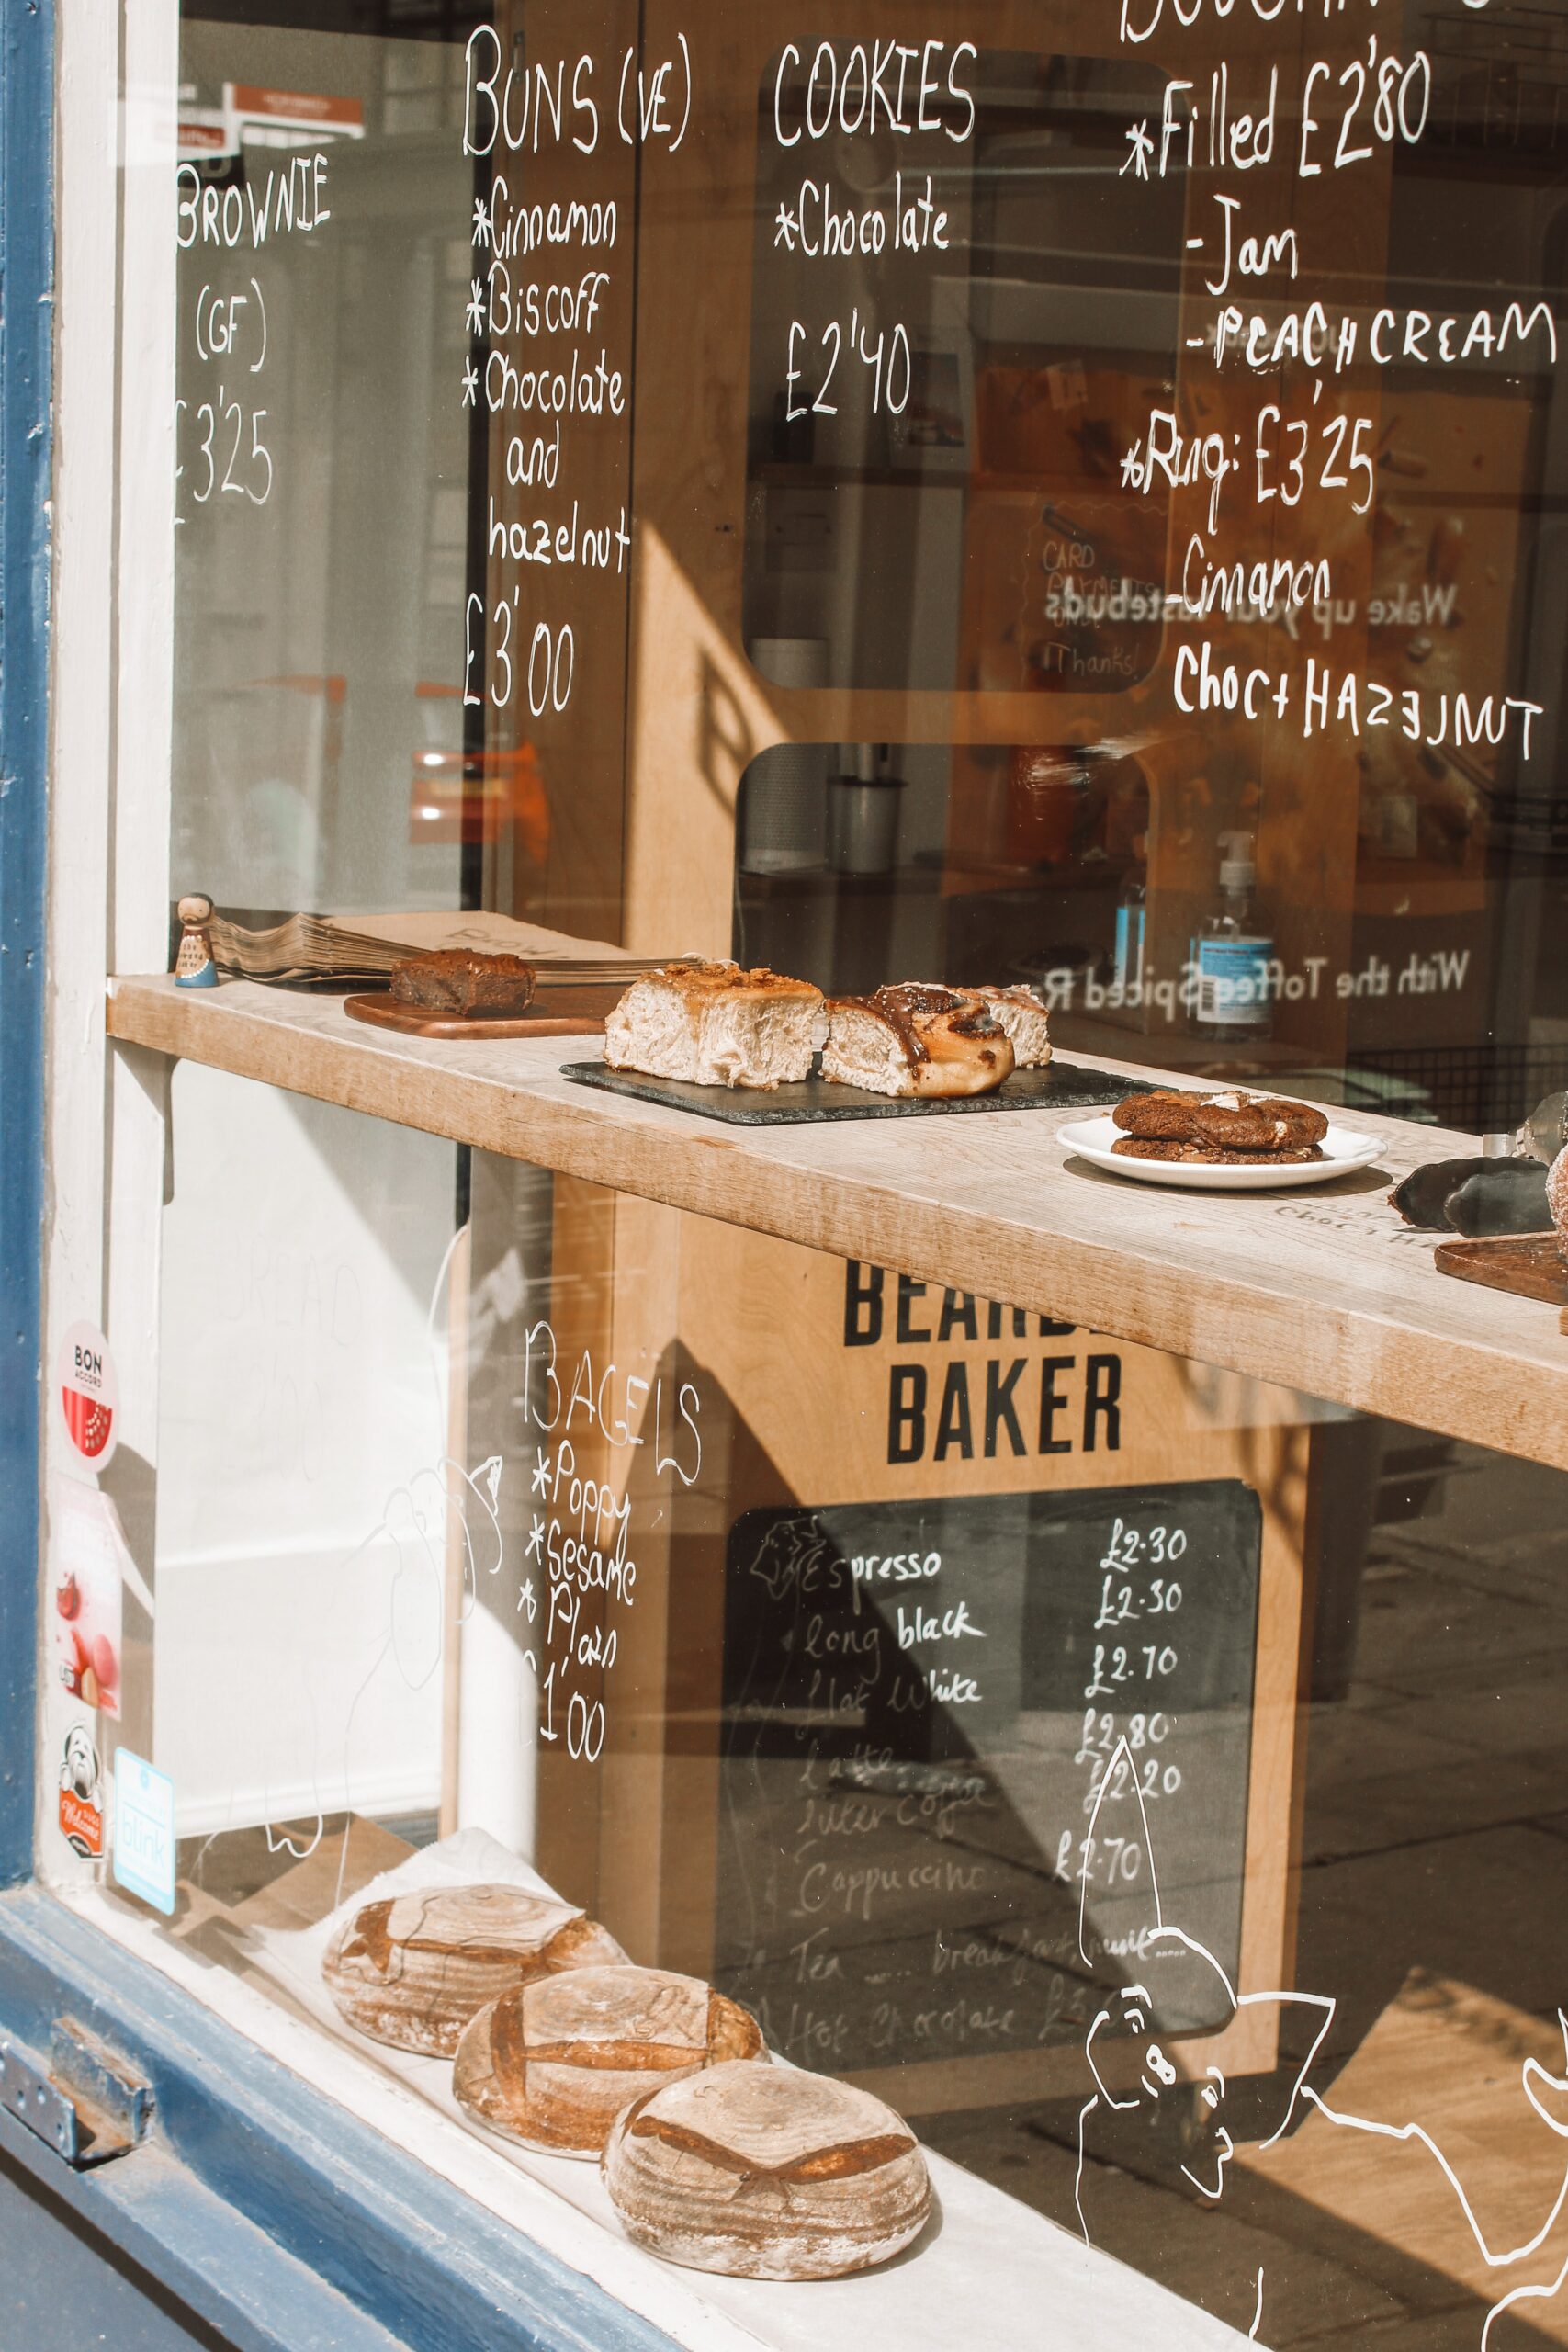 Fresh Baked goods in a Local Bakery Window in Edinburgh.